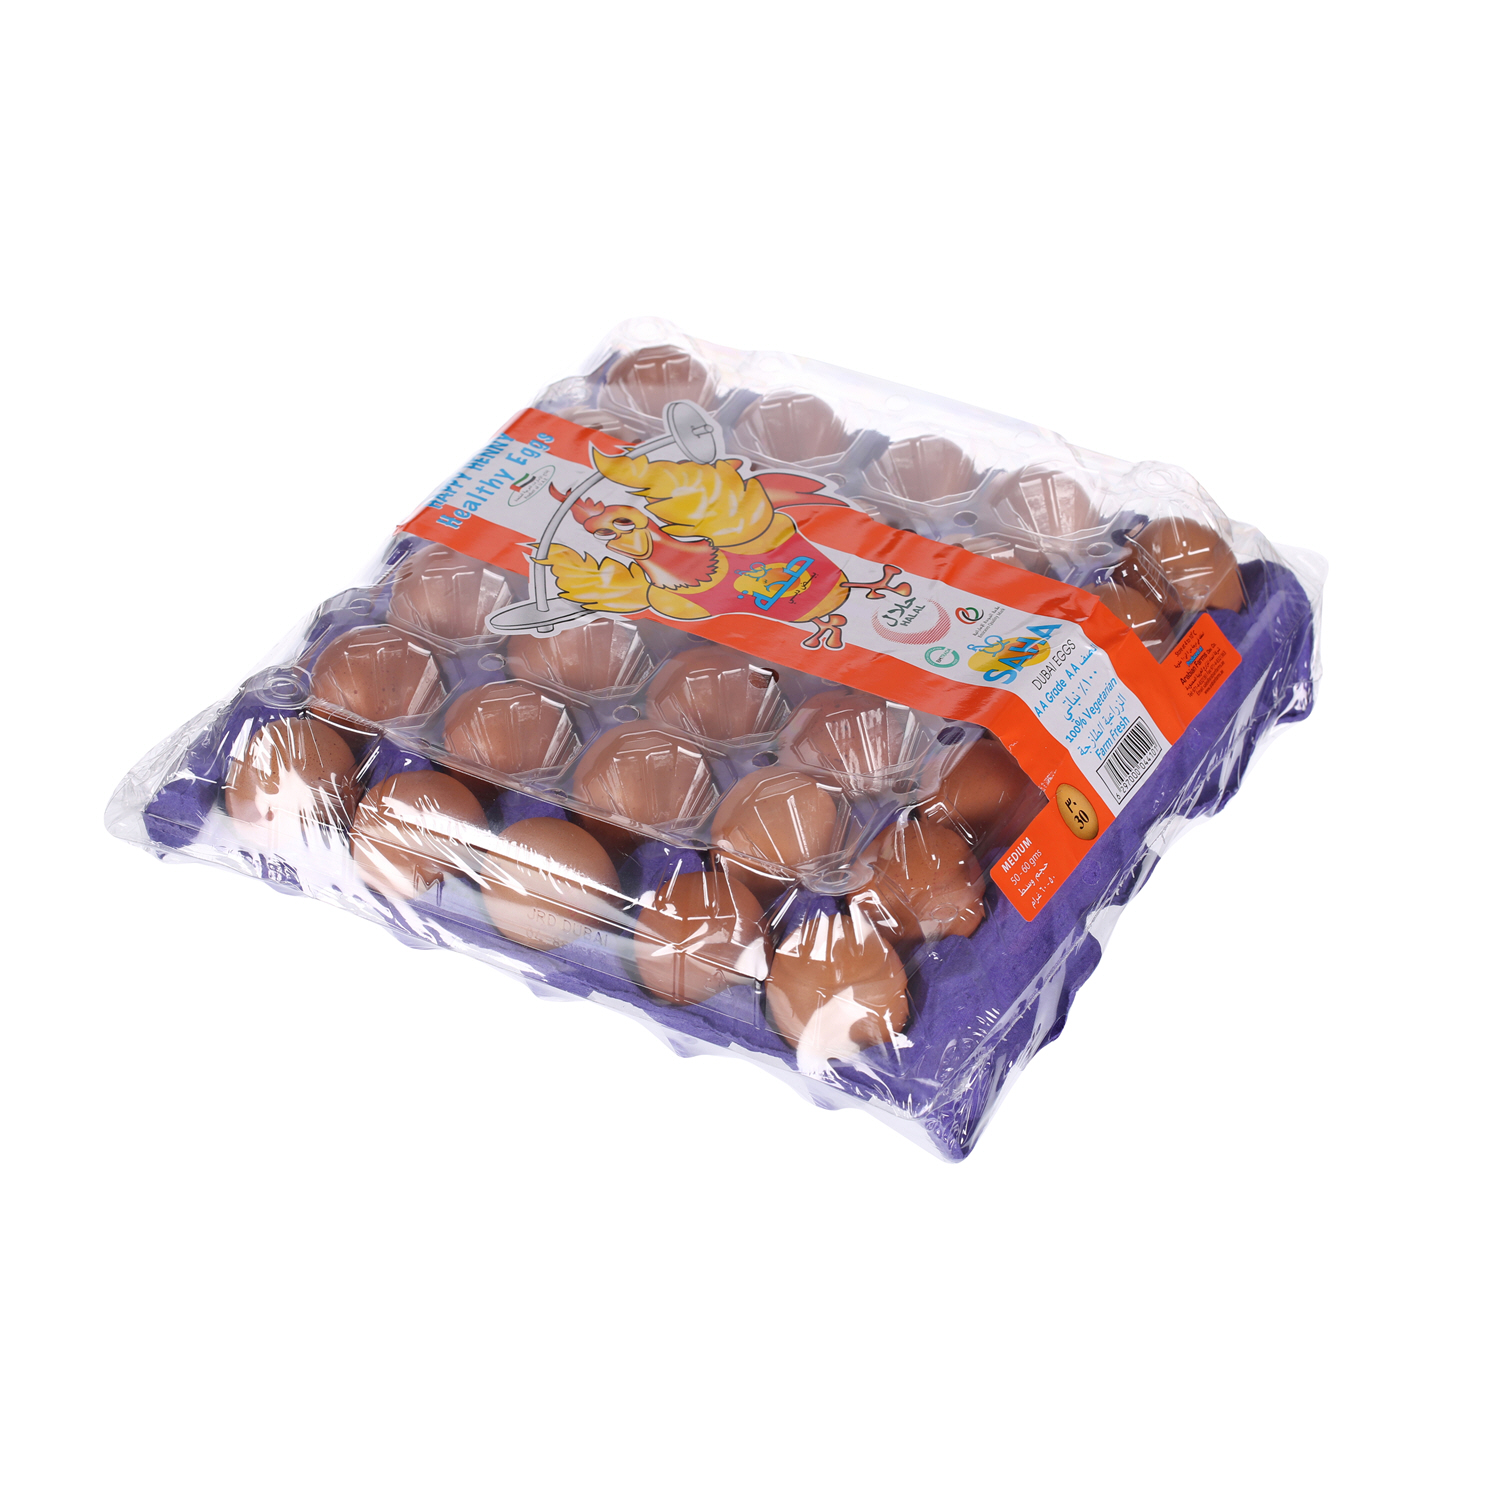 Saha Dubai Brown Eggs Medium 30 Pack